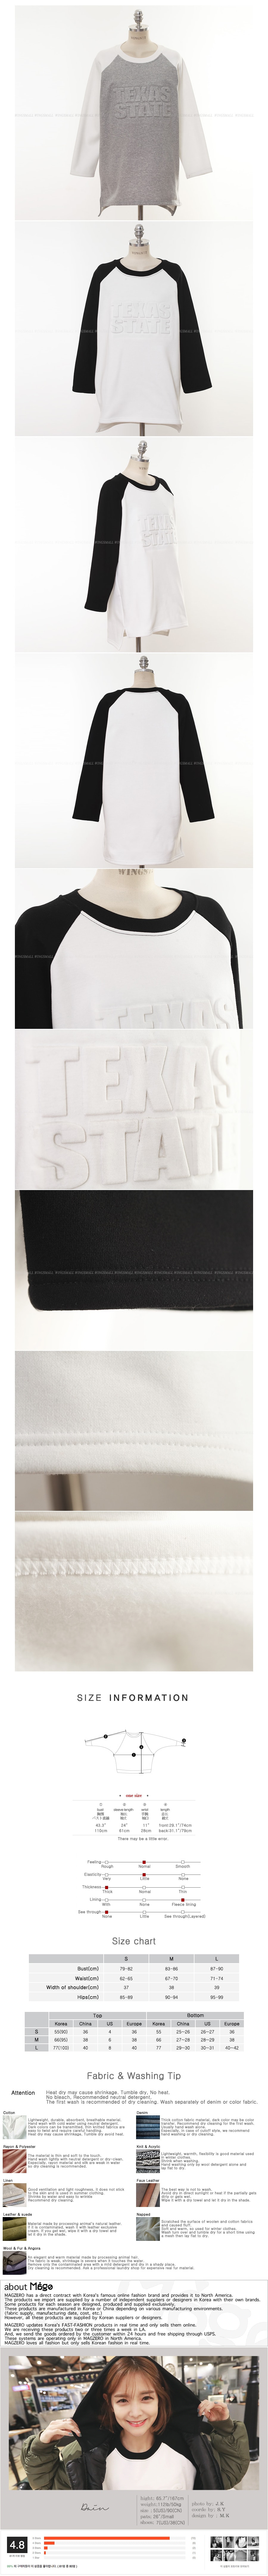 KOREA Embossed letters Fleece Raglan T-shirt Grey One Size(Free) [Free Shipping]